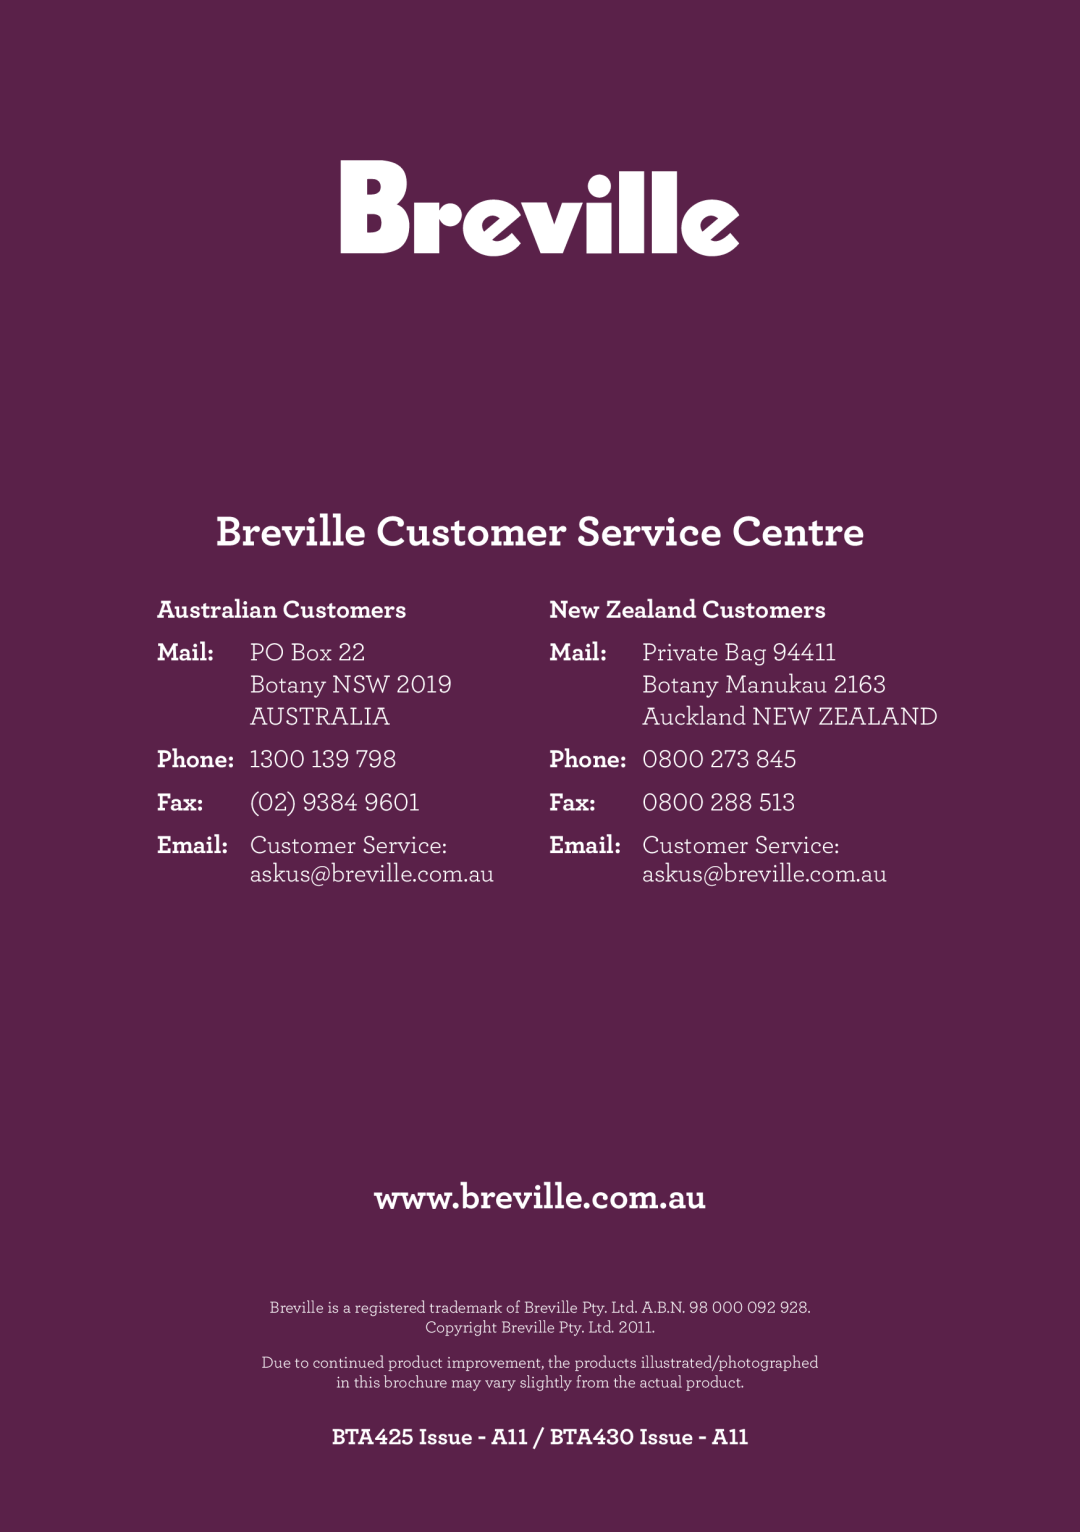 Breville BTA425 brochure Breville Customer Service Centre, Australian Customers, New Zealand Customers, Mail, Phone, Email 